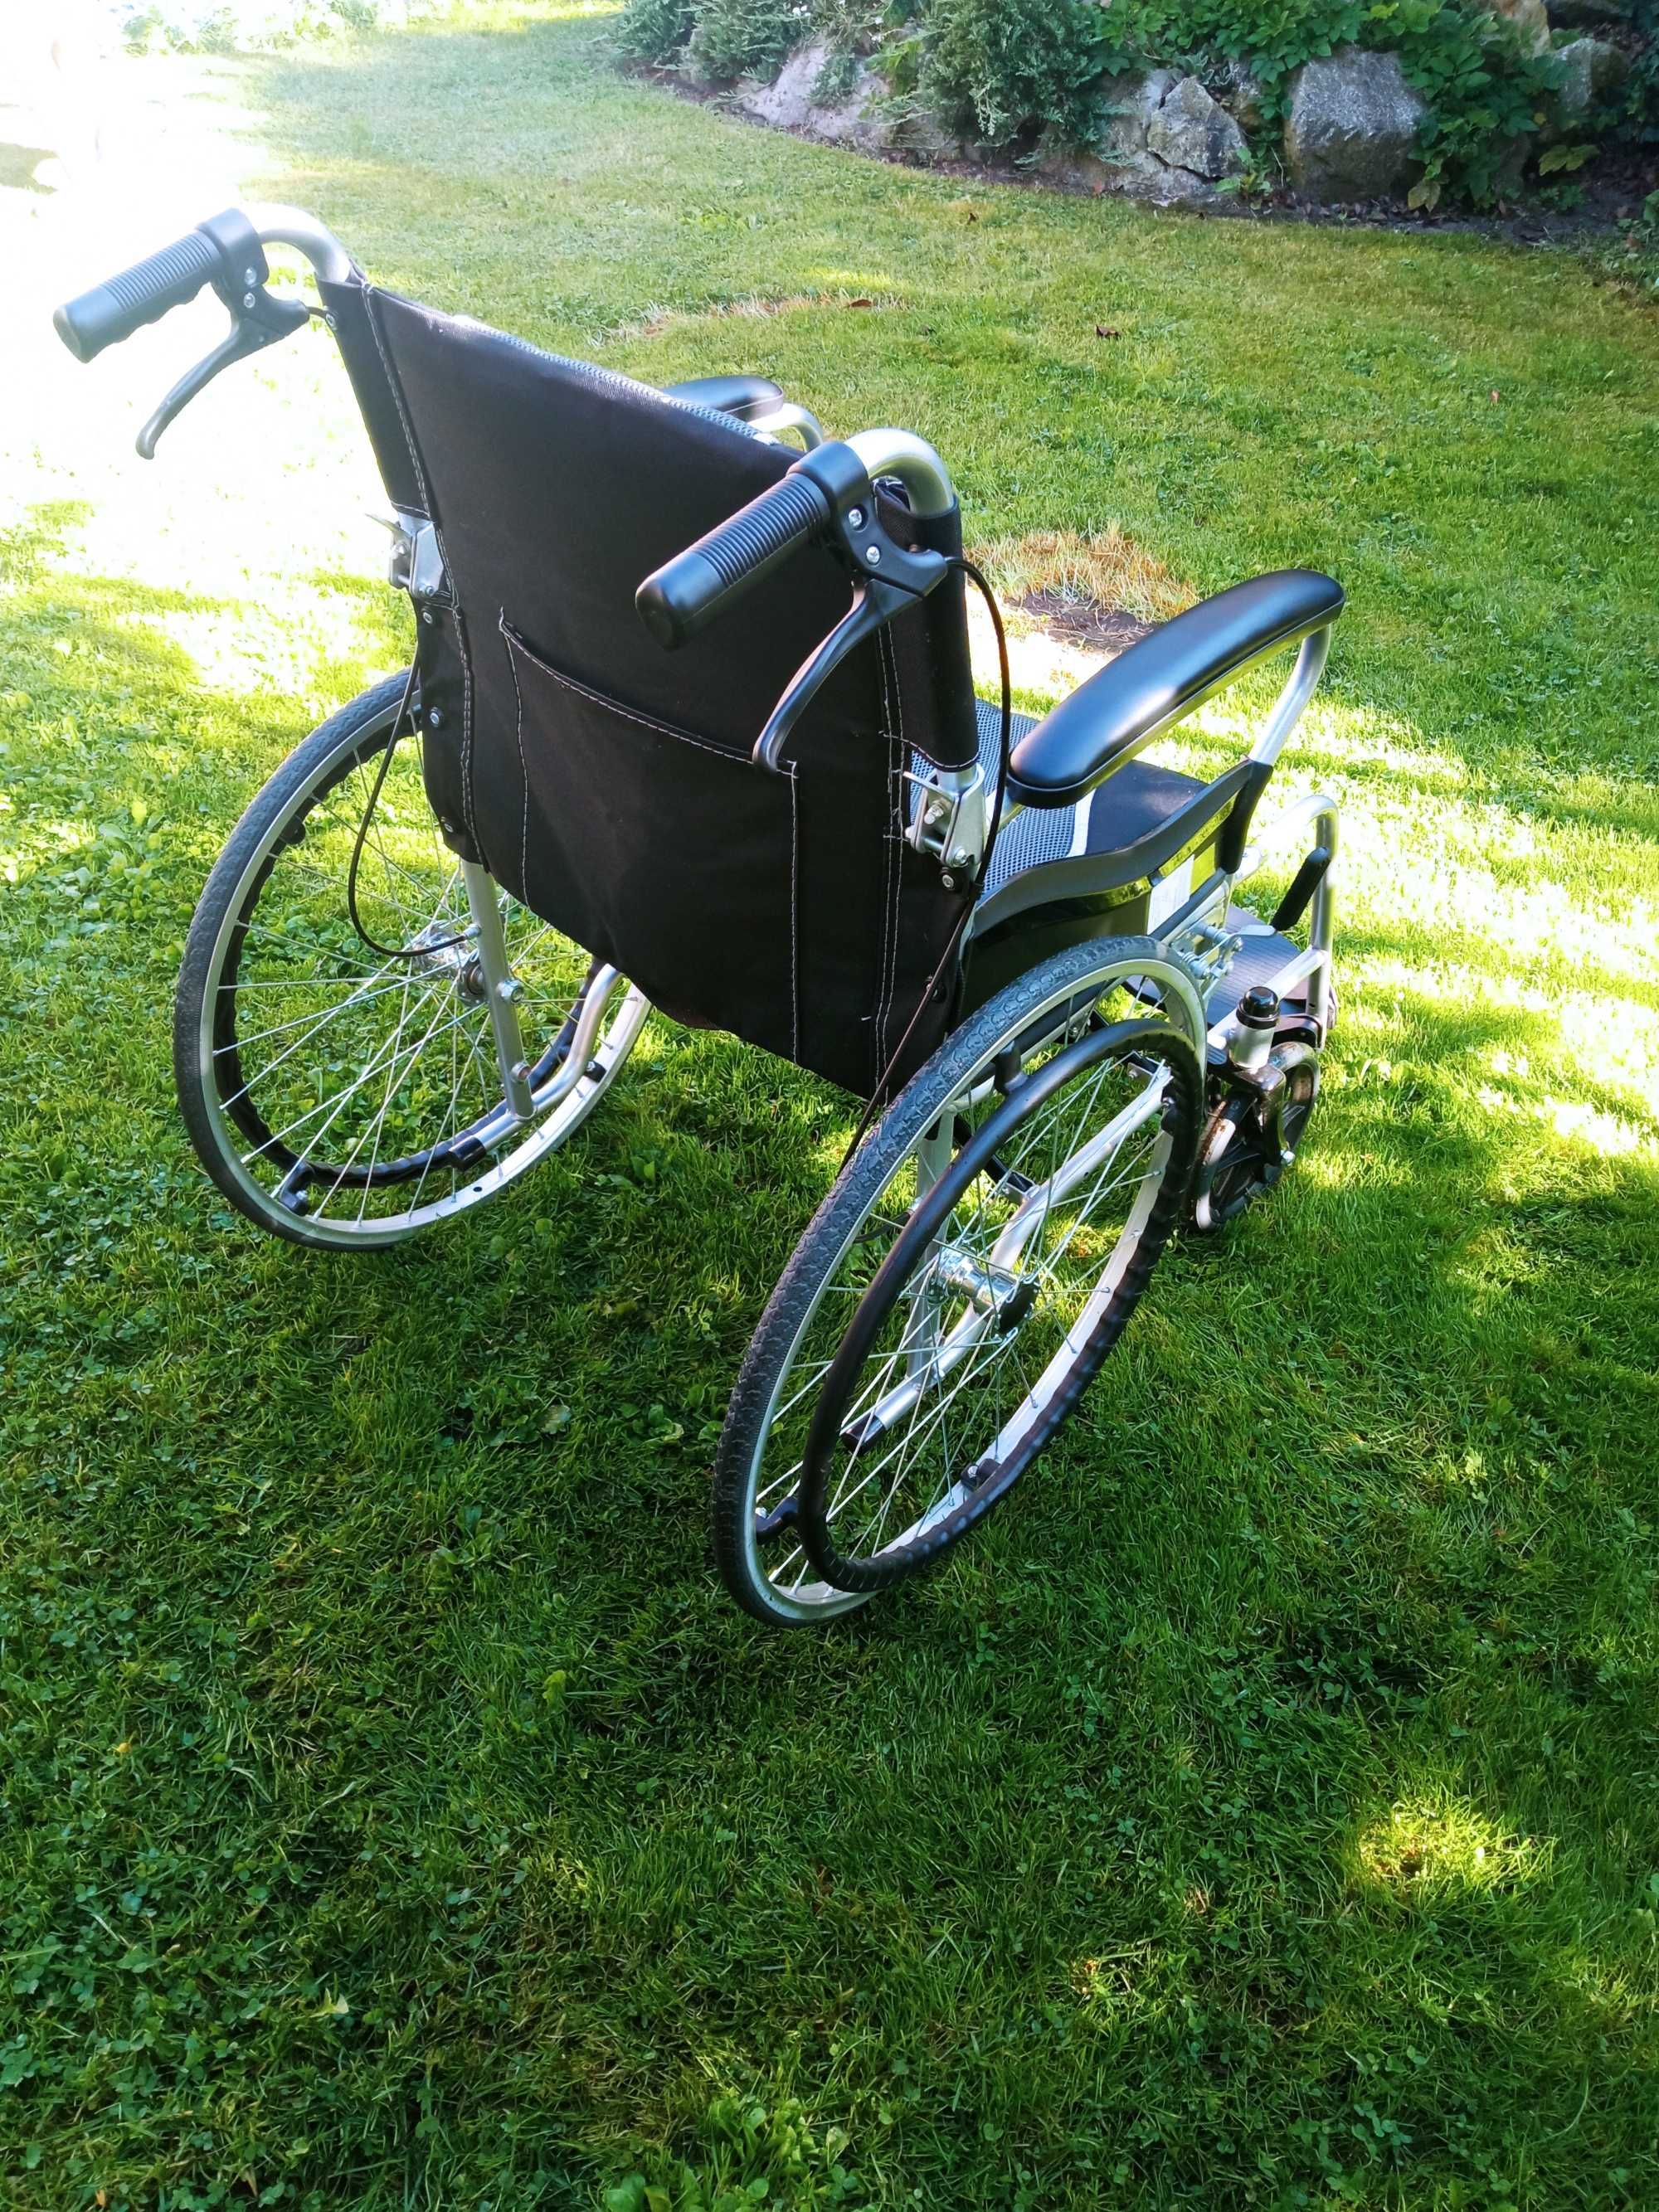 Lekki wózek inwalidzki Antar AT52301